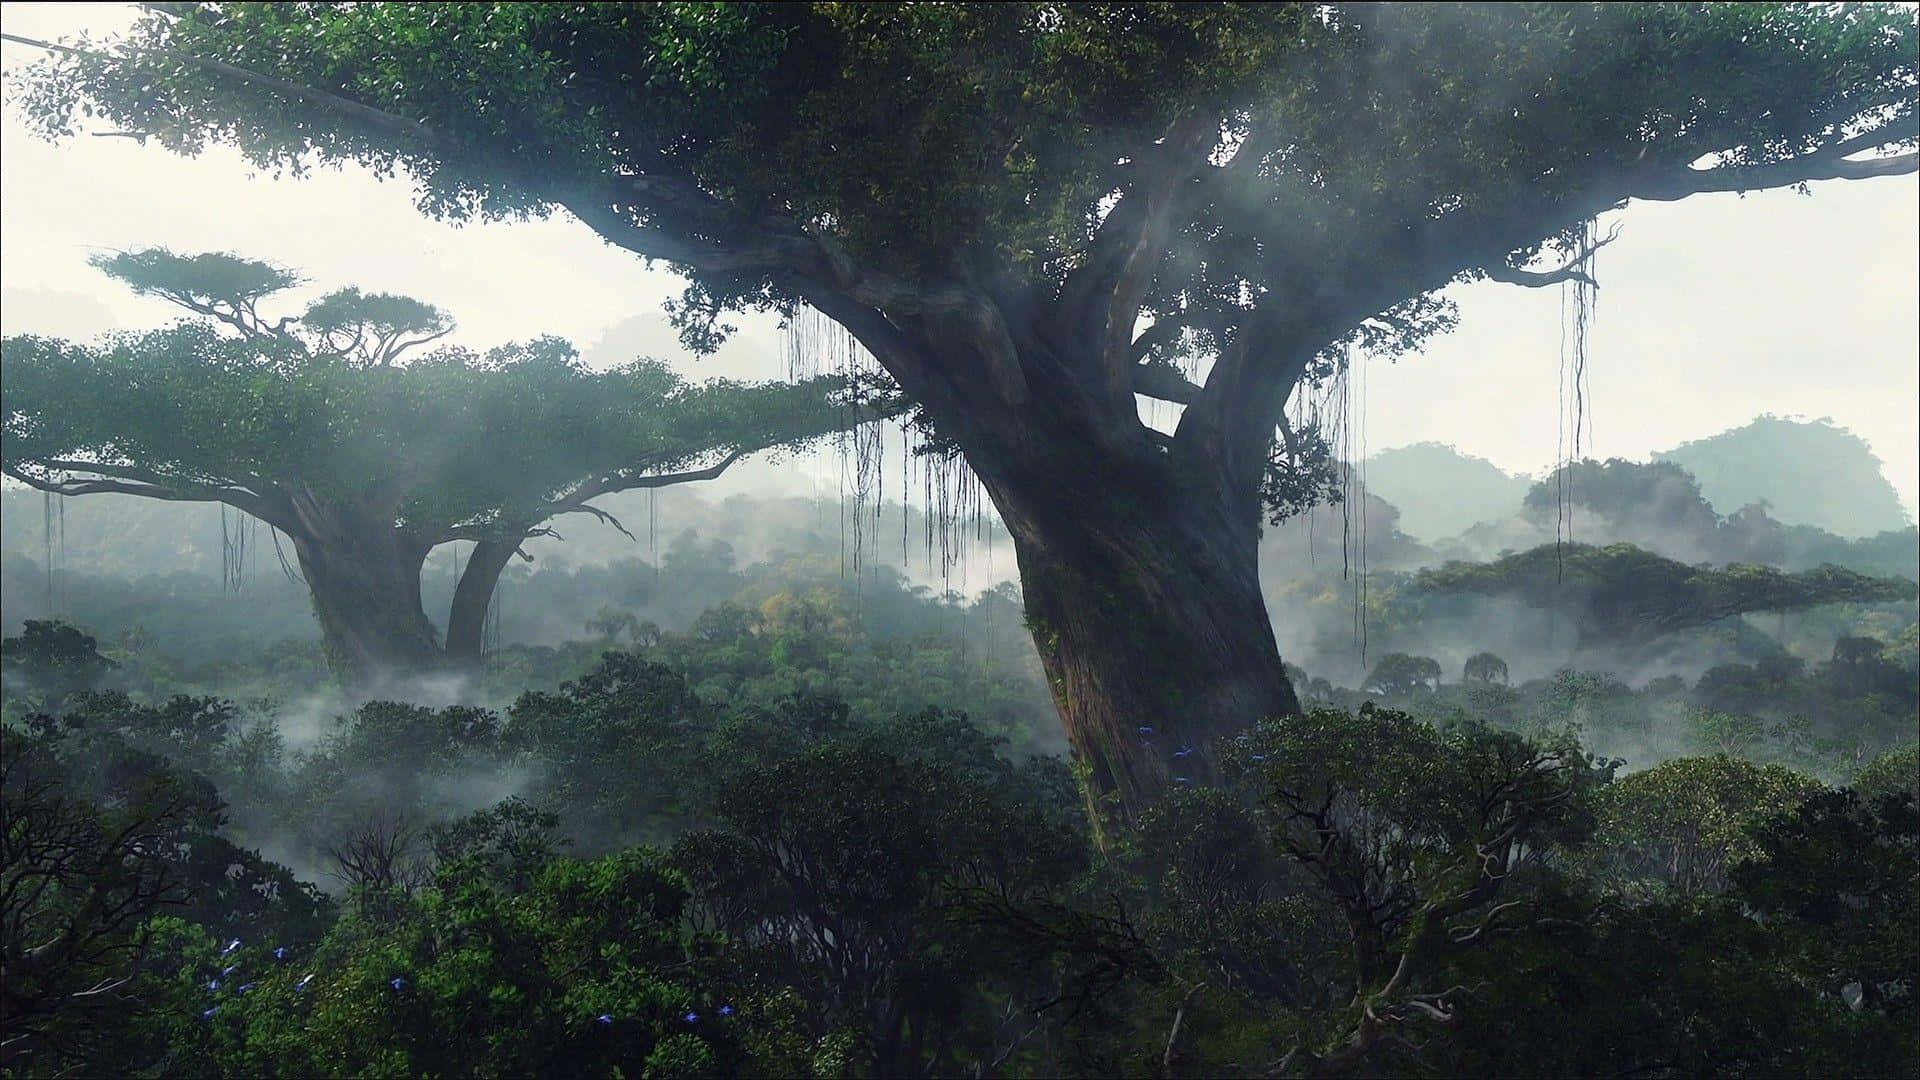 Explore the vast beauty of the rainforest